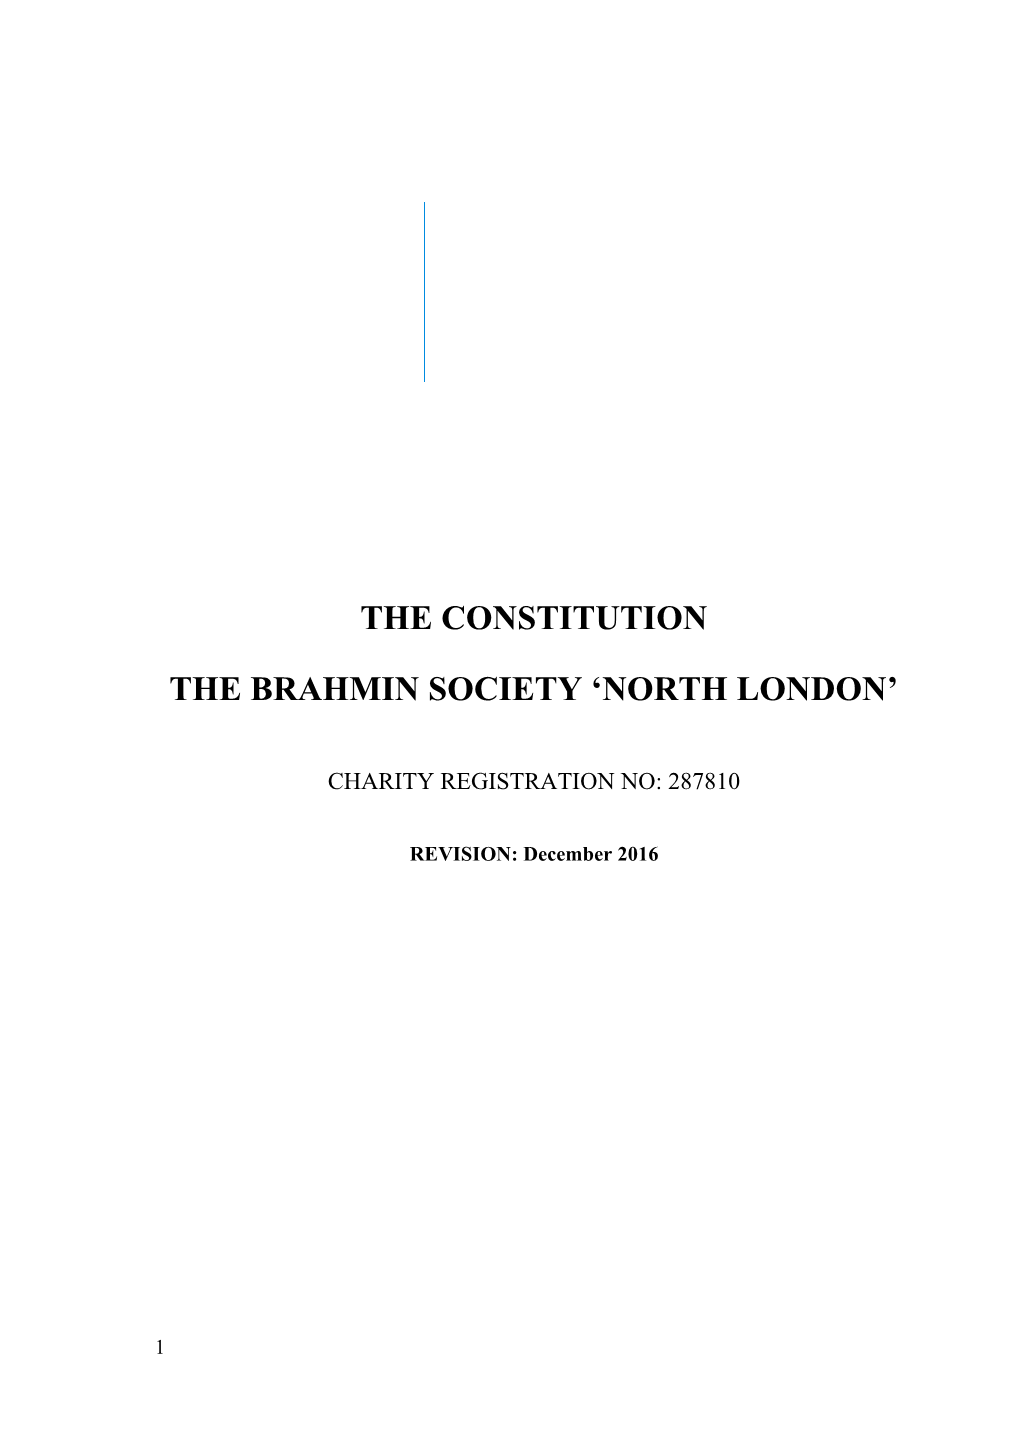 The Brahmin Society North London